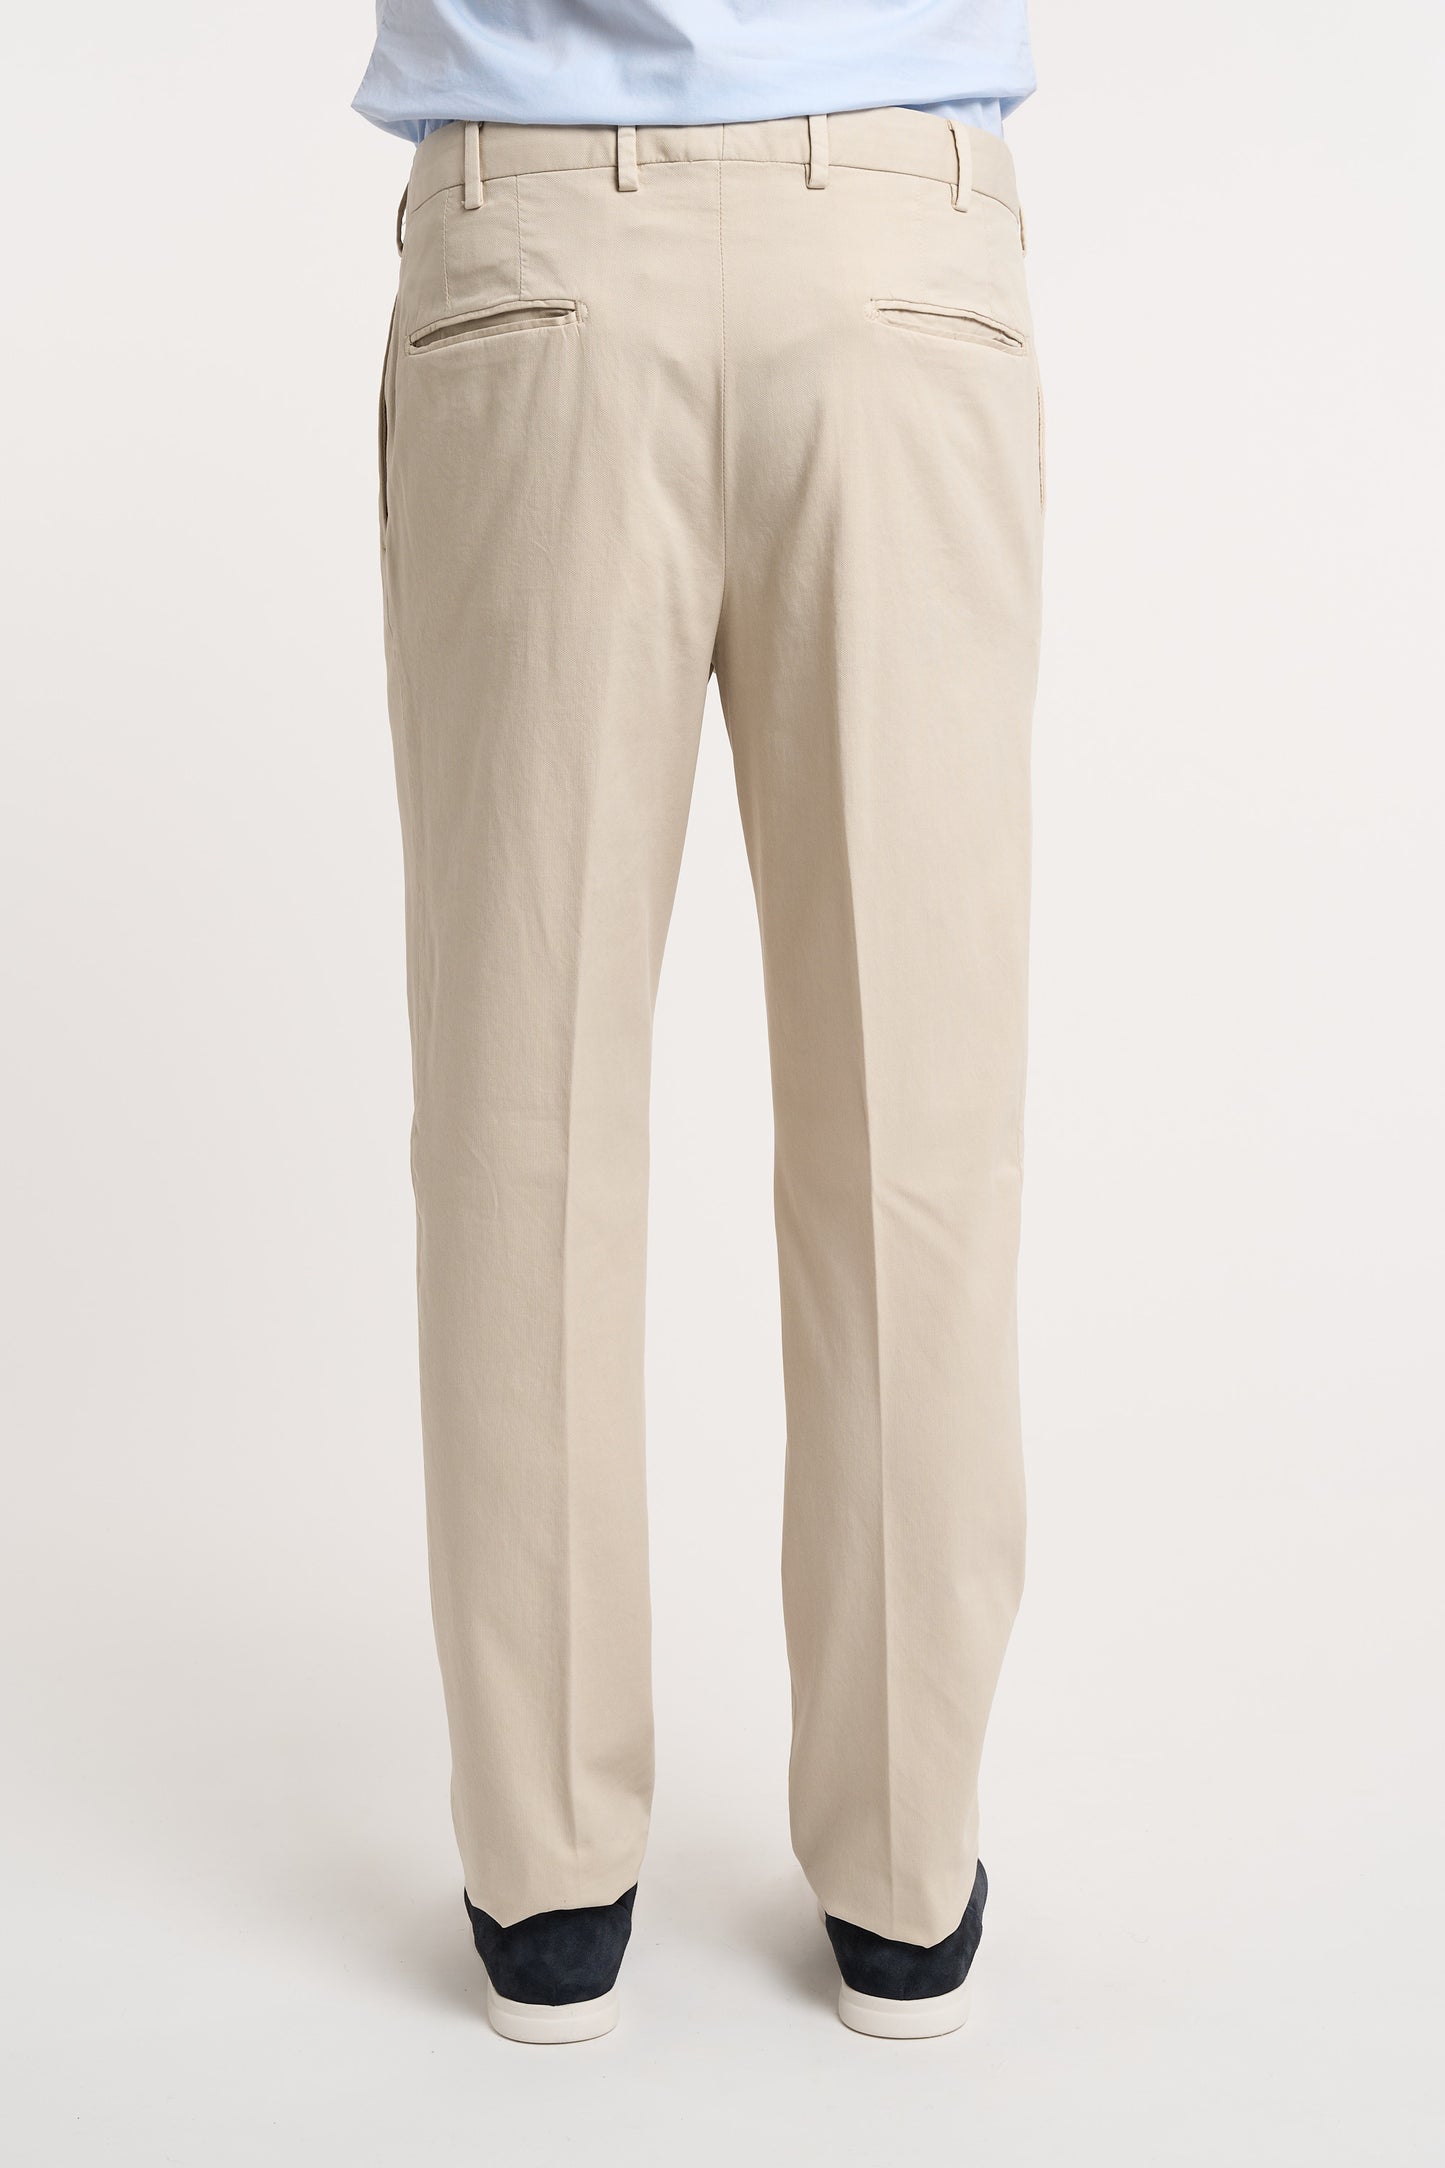  Devore Pantalone Pence In Cotone/seta/elastan Grigio Beige Uomo - 4